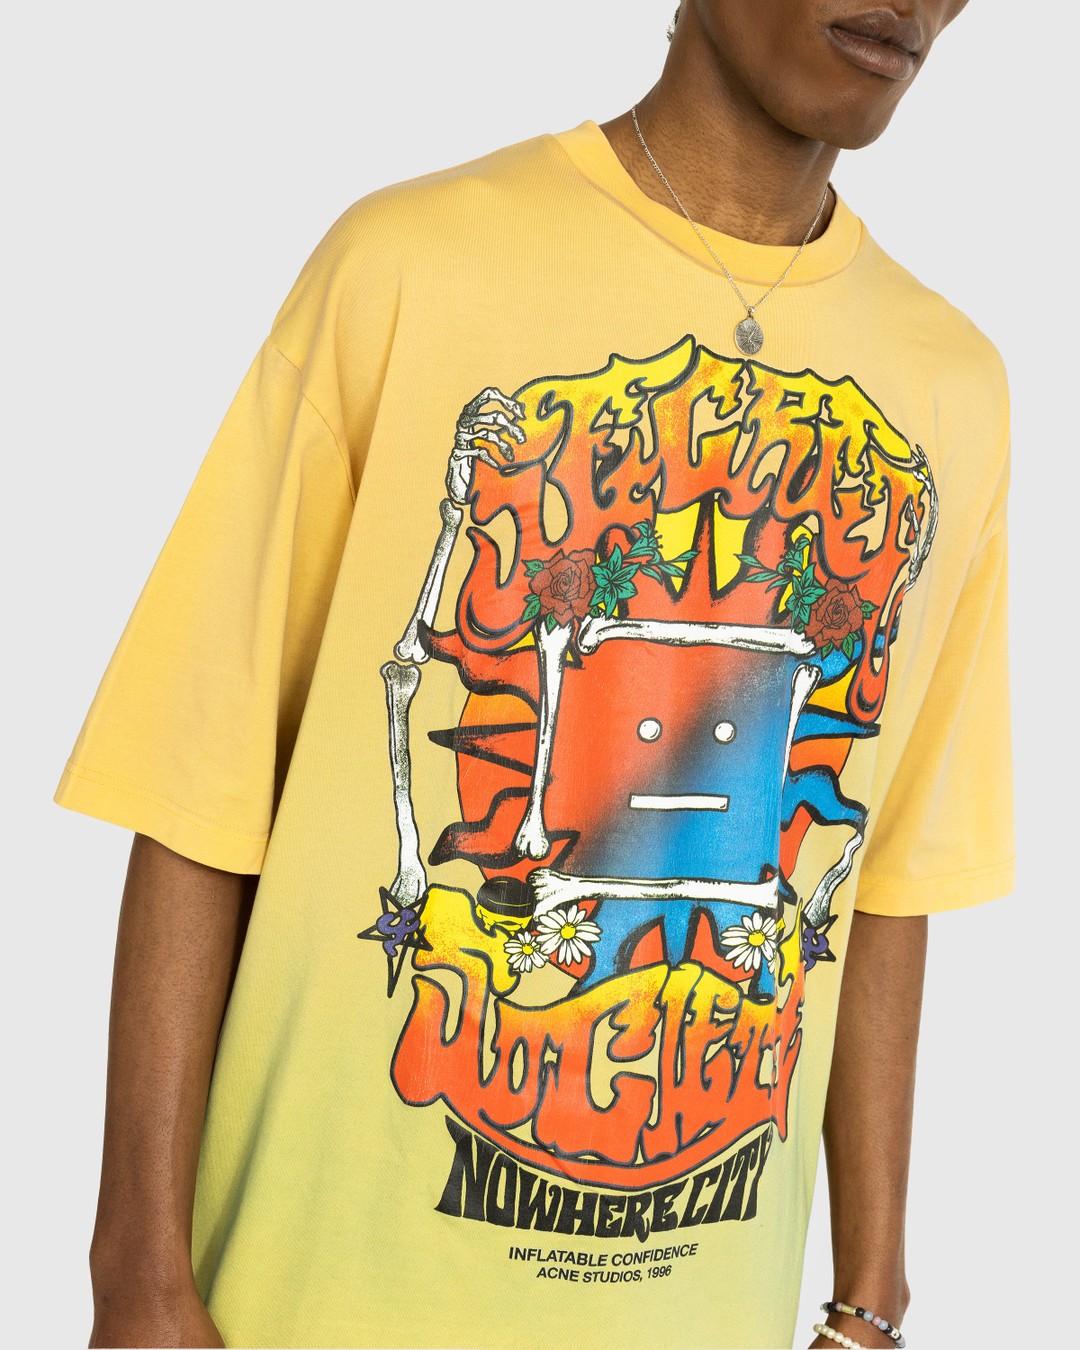 Acne Studios – Cracked Print T-Shirt Multi - Tops - Multi - Image 4